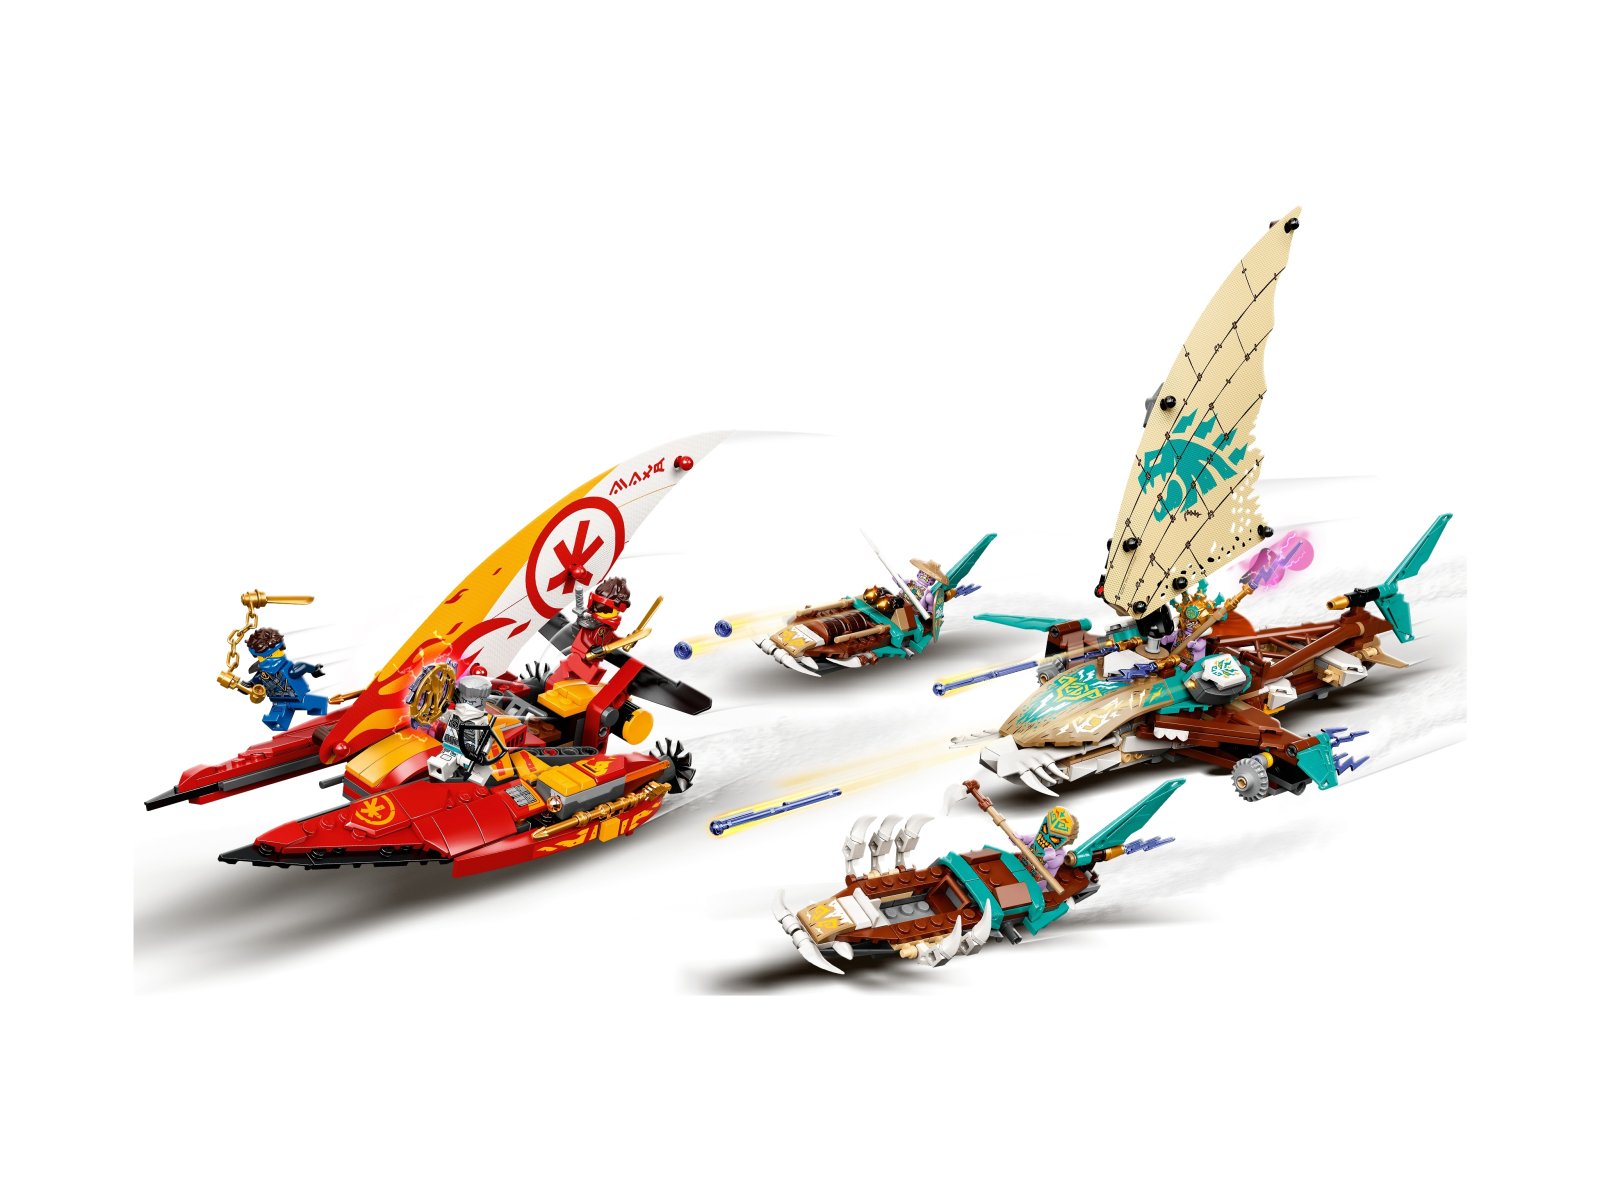 LEGO Ninjago Morska bitwa katamaranów 71748